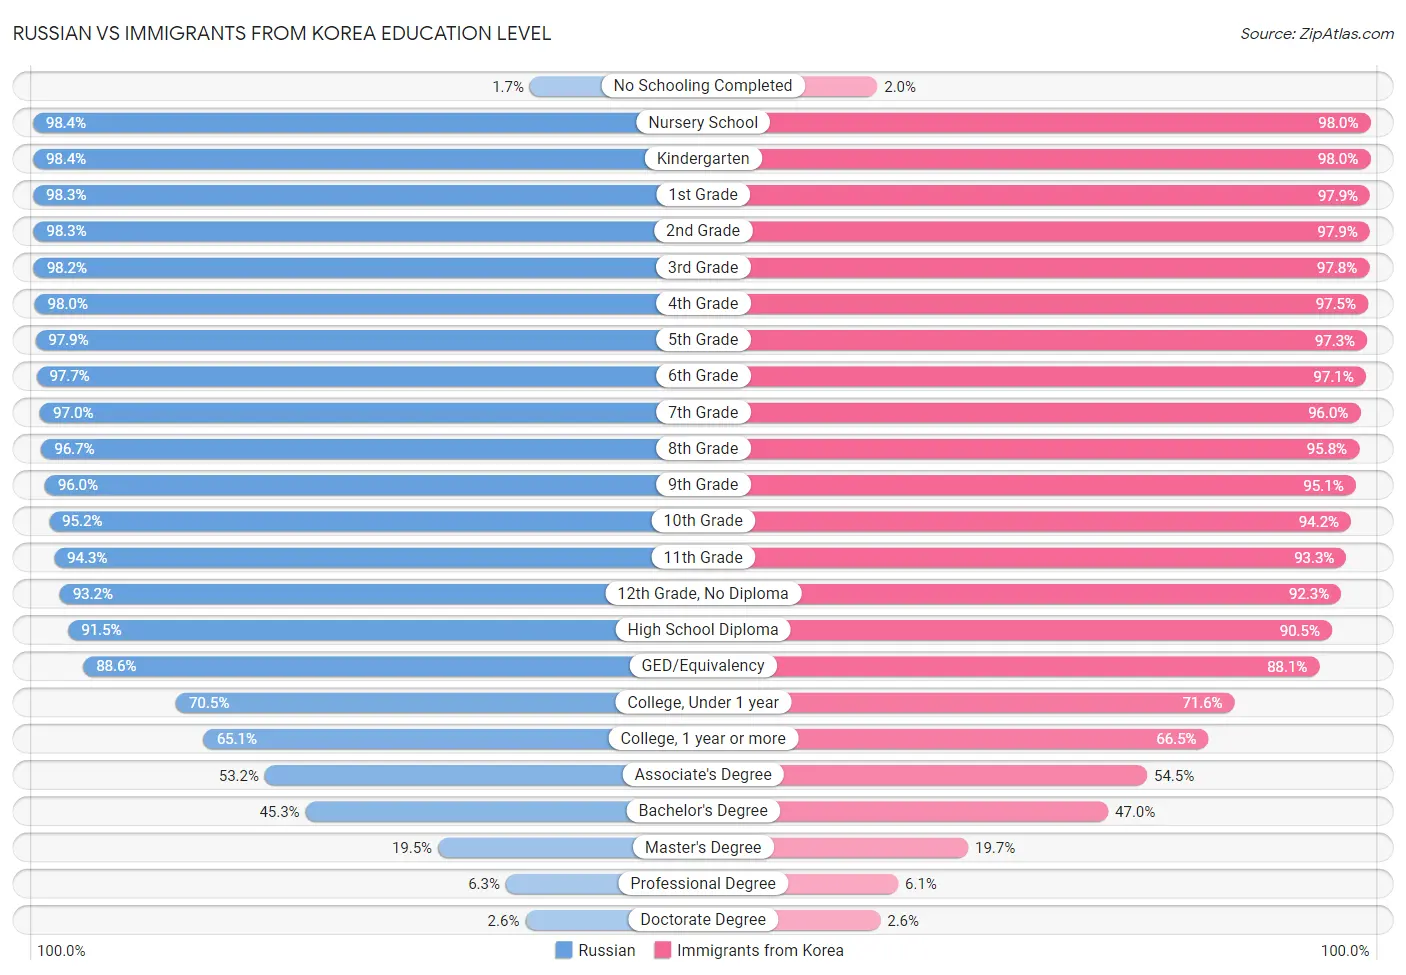 Russian vs Immigrants from Korea Education Level